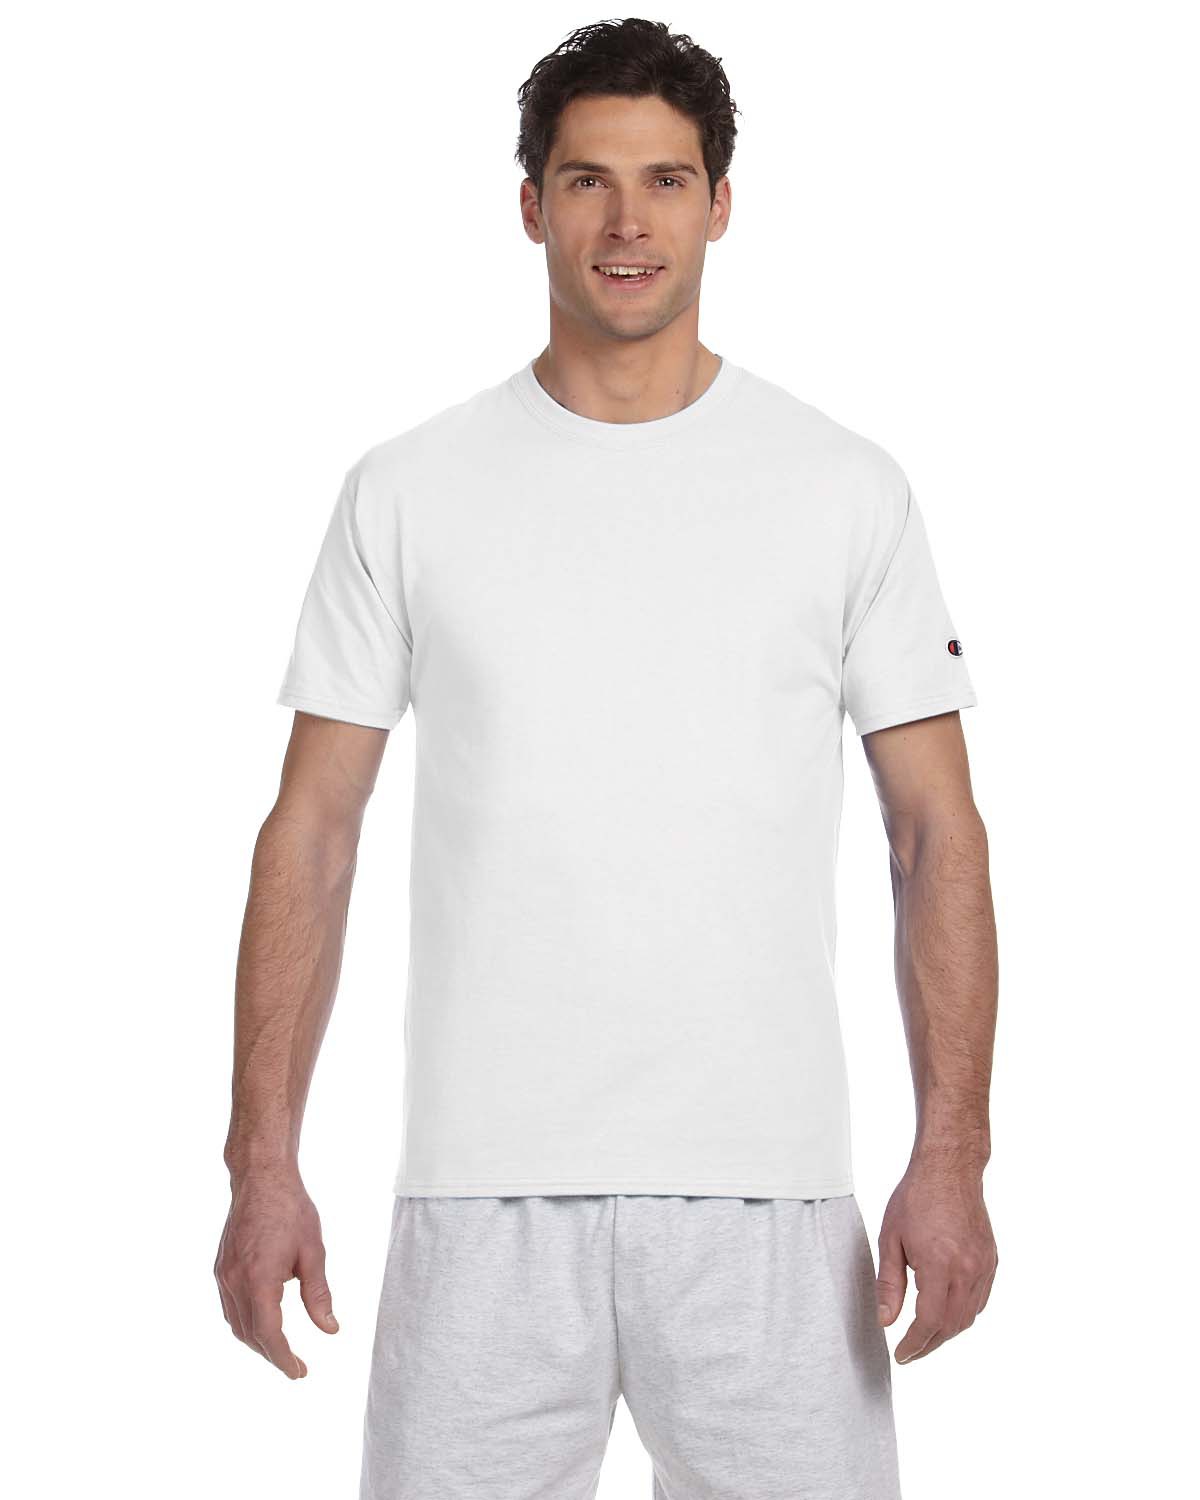 Aanleg kroeg lucht Champion T525C - 100% Cotton Tagless T-Shirt $5.98 - T-Shirts